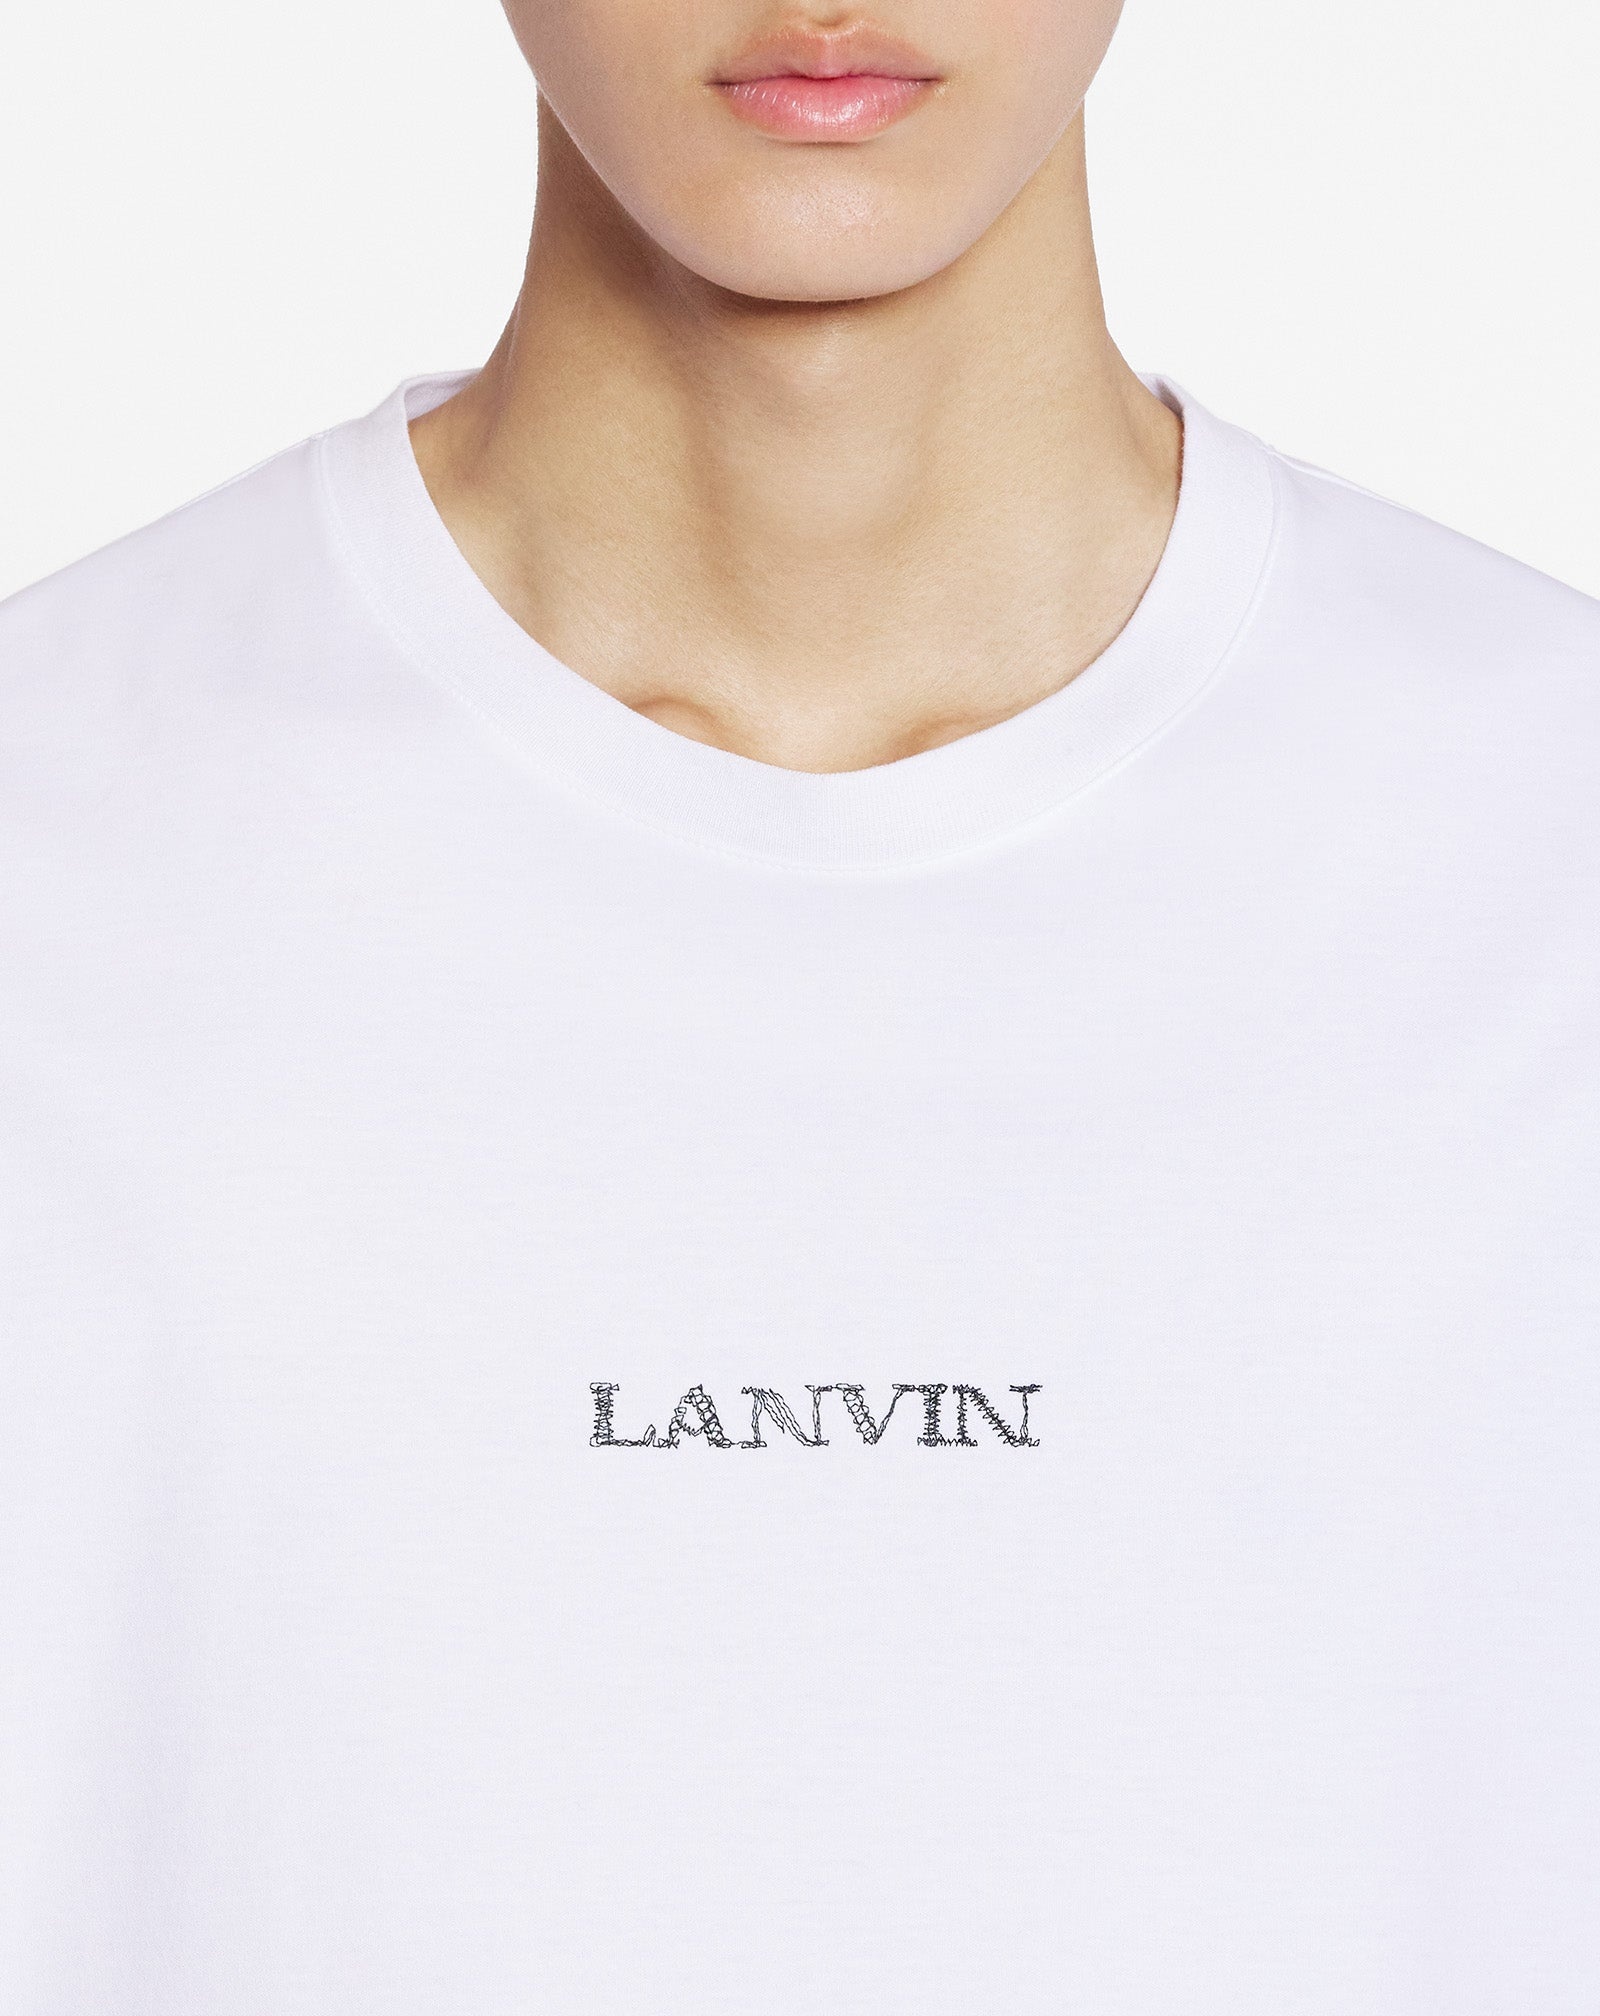 LANVIN LOGO CLASSIC T-SHIRT - 7